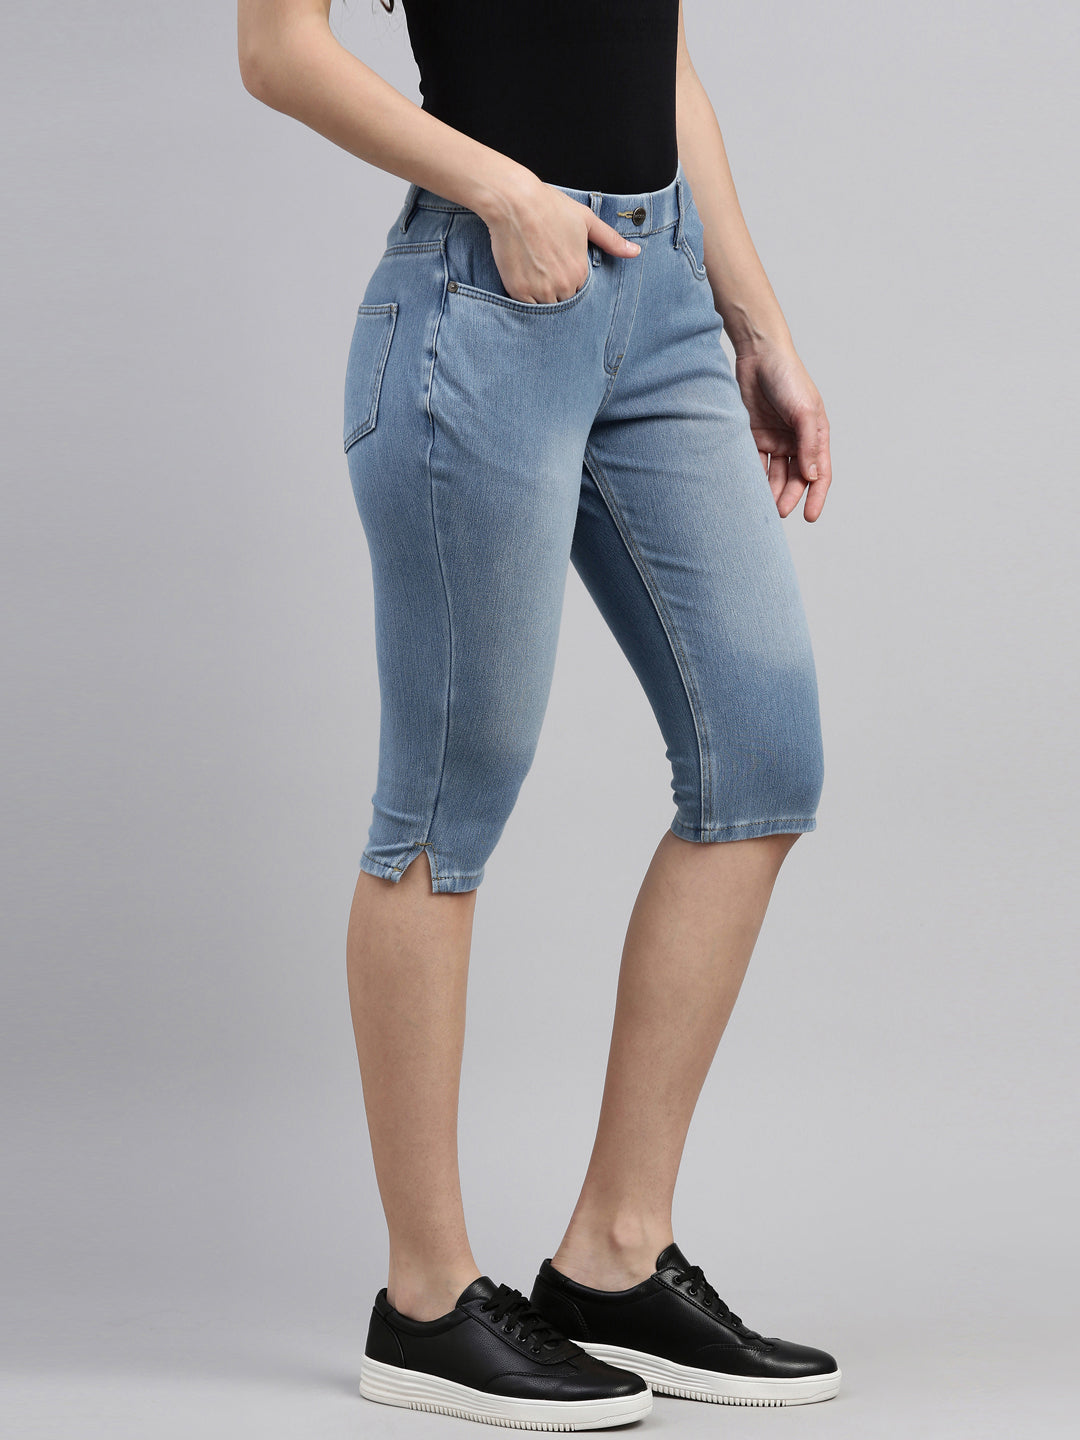 Ladies Stretch Pants Capri Shorts Denim Effect Treggings 3/4 Jeans Knee  length